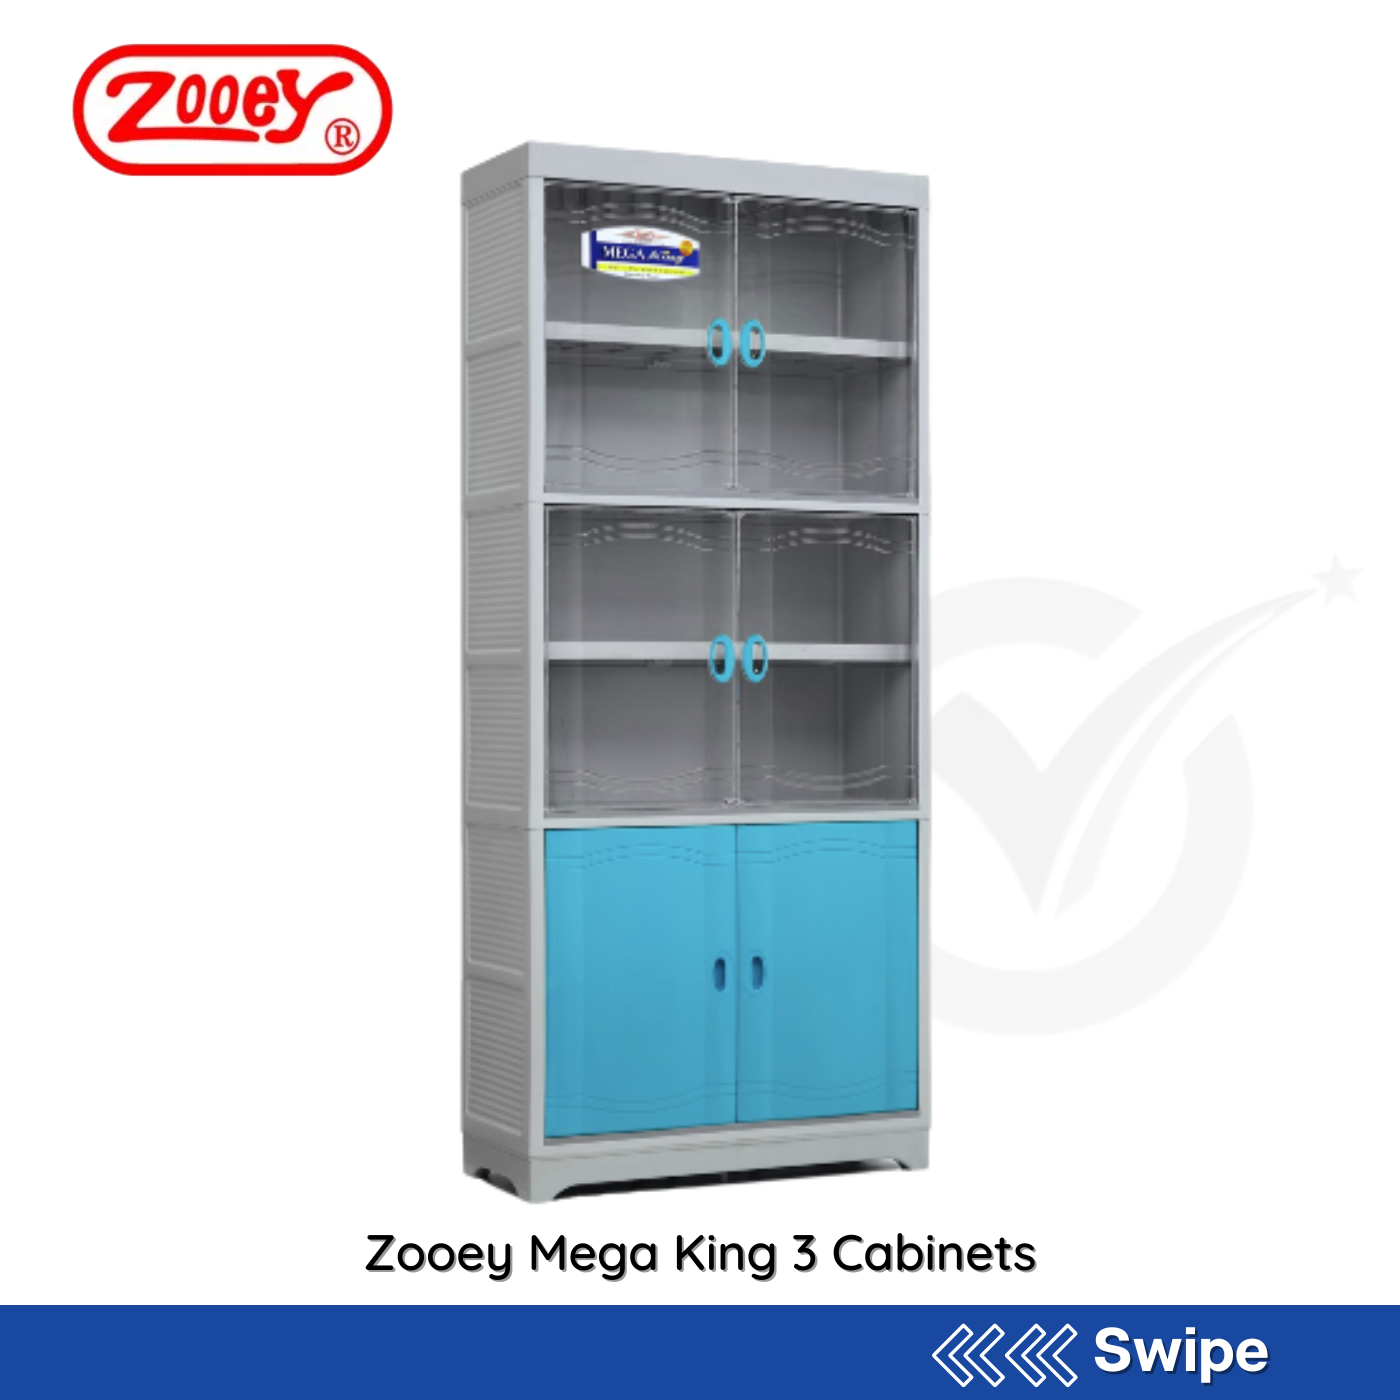 Zooey Mega King 3 Cabinets - People's Choice Marketing